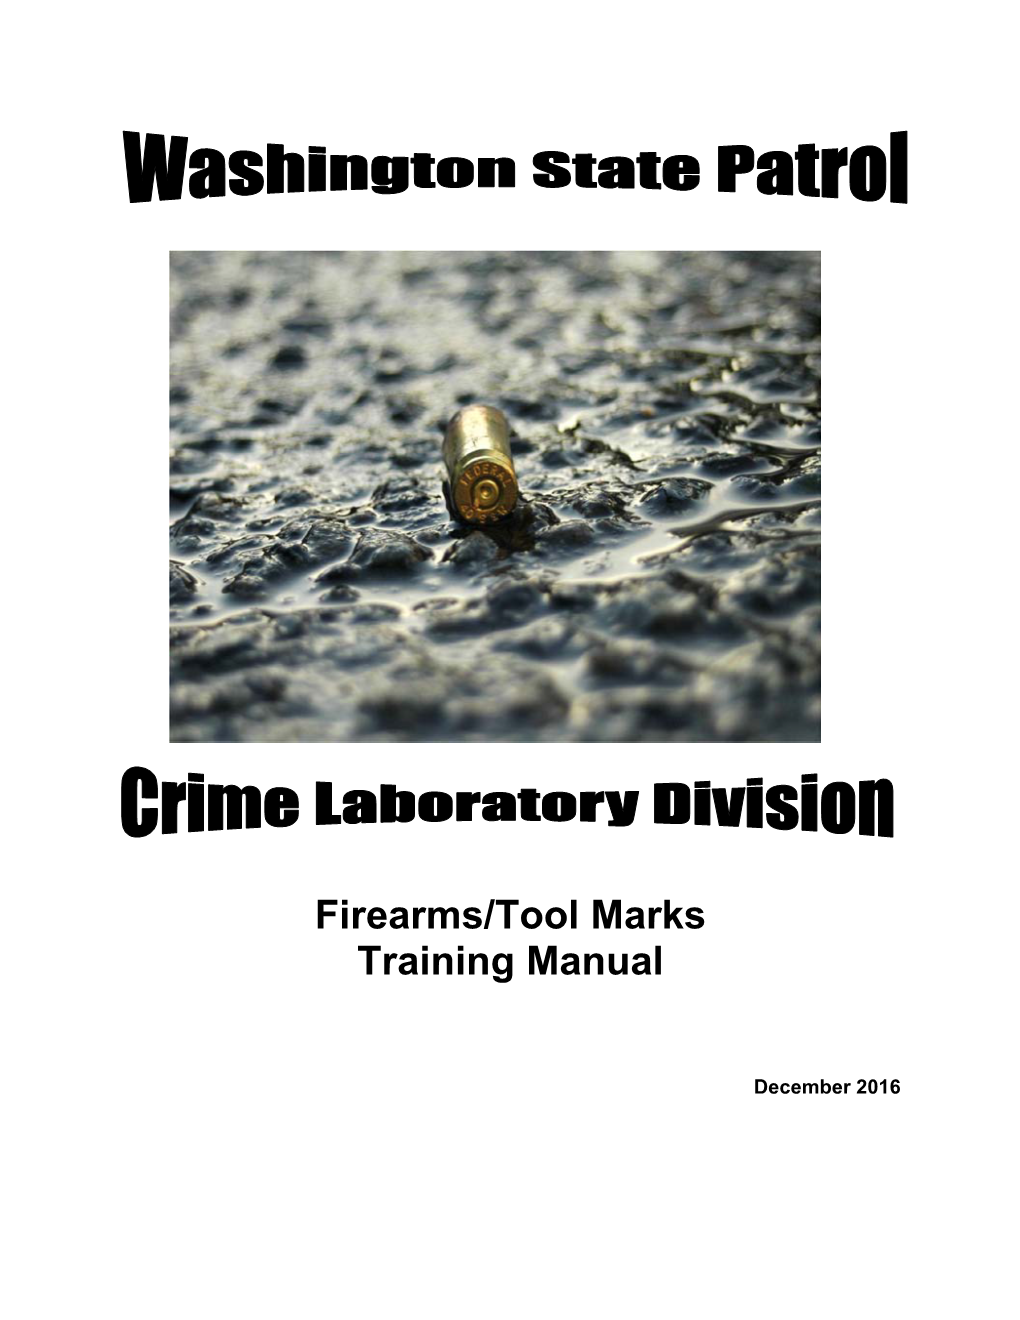 Firearms/Tool Marks Training Manual